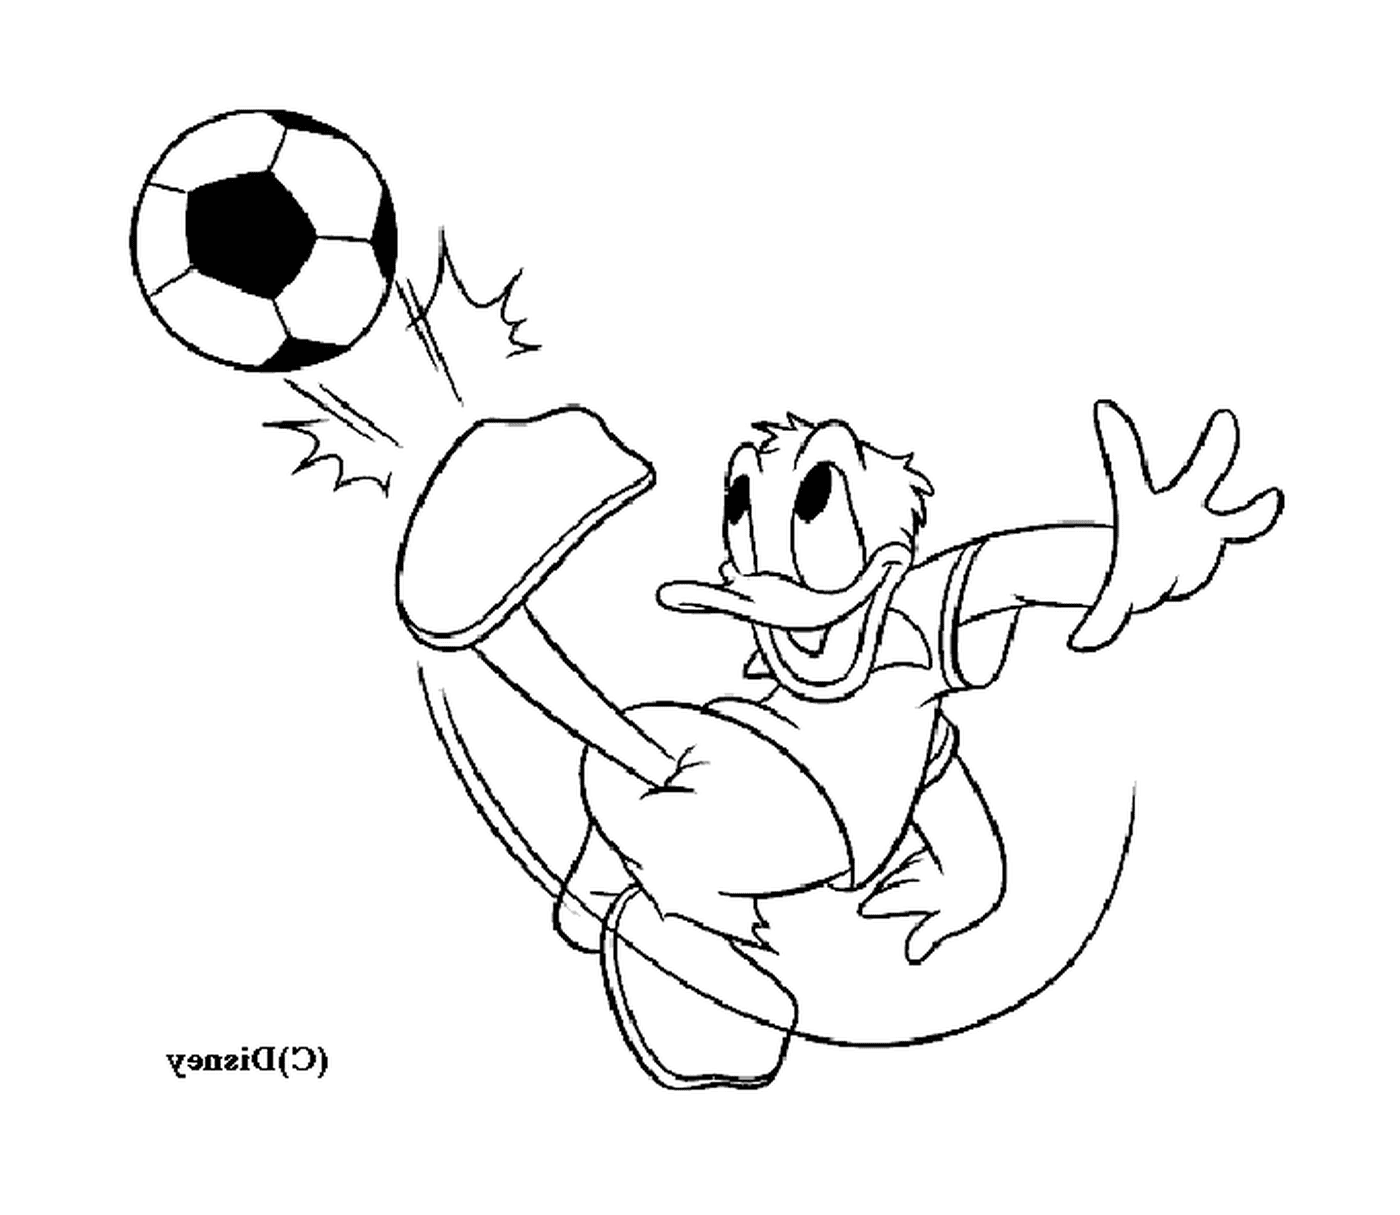  Donald plays football enthusiastically 